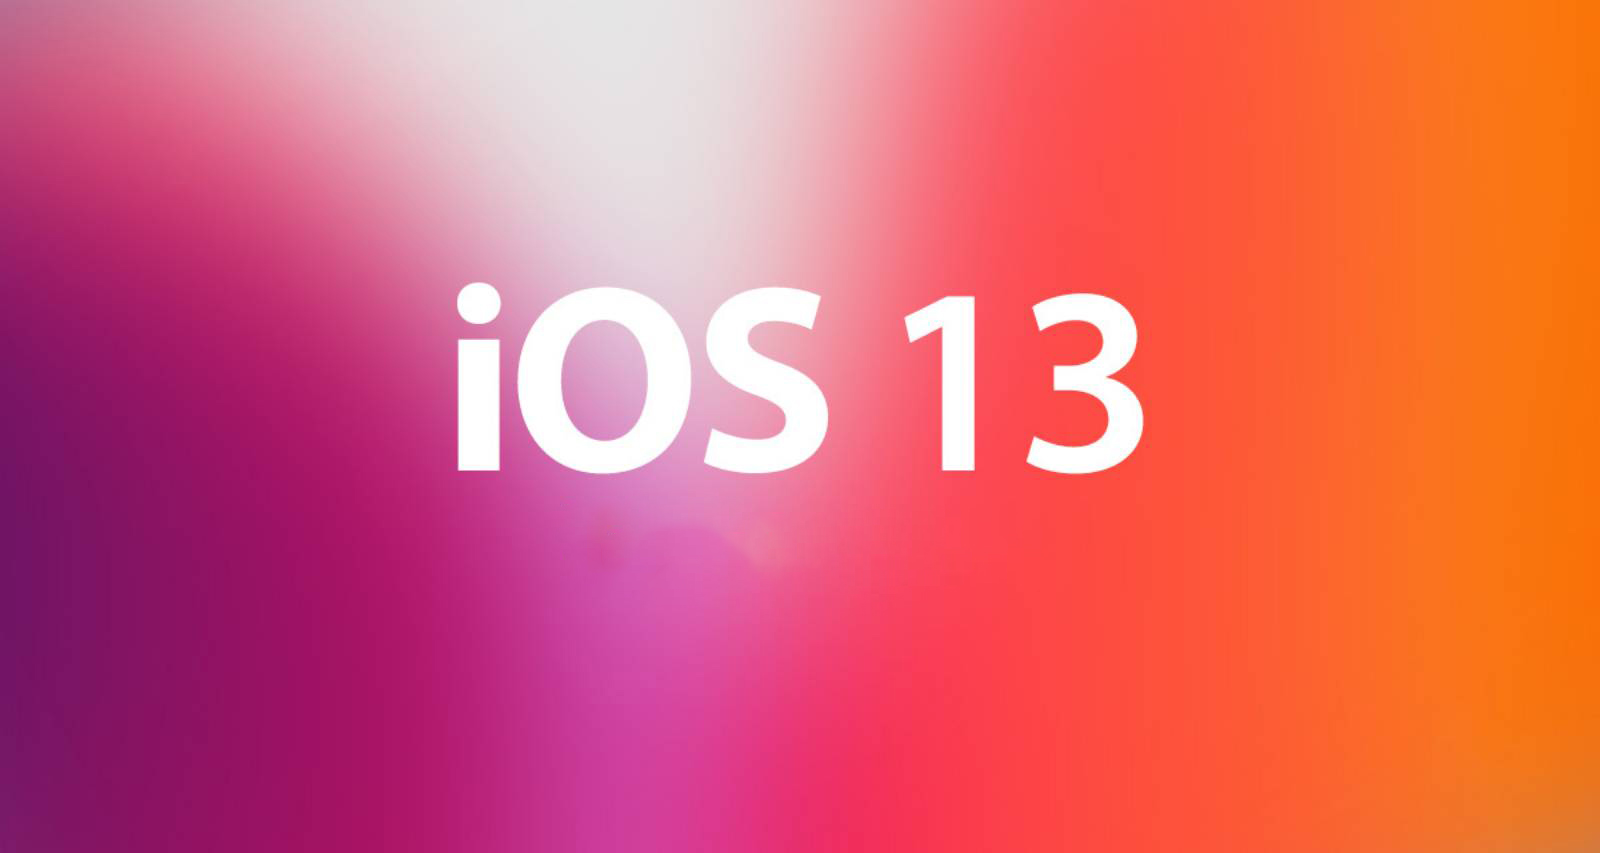 13.2 iOS Beta